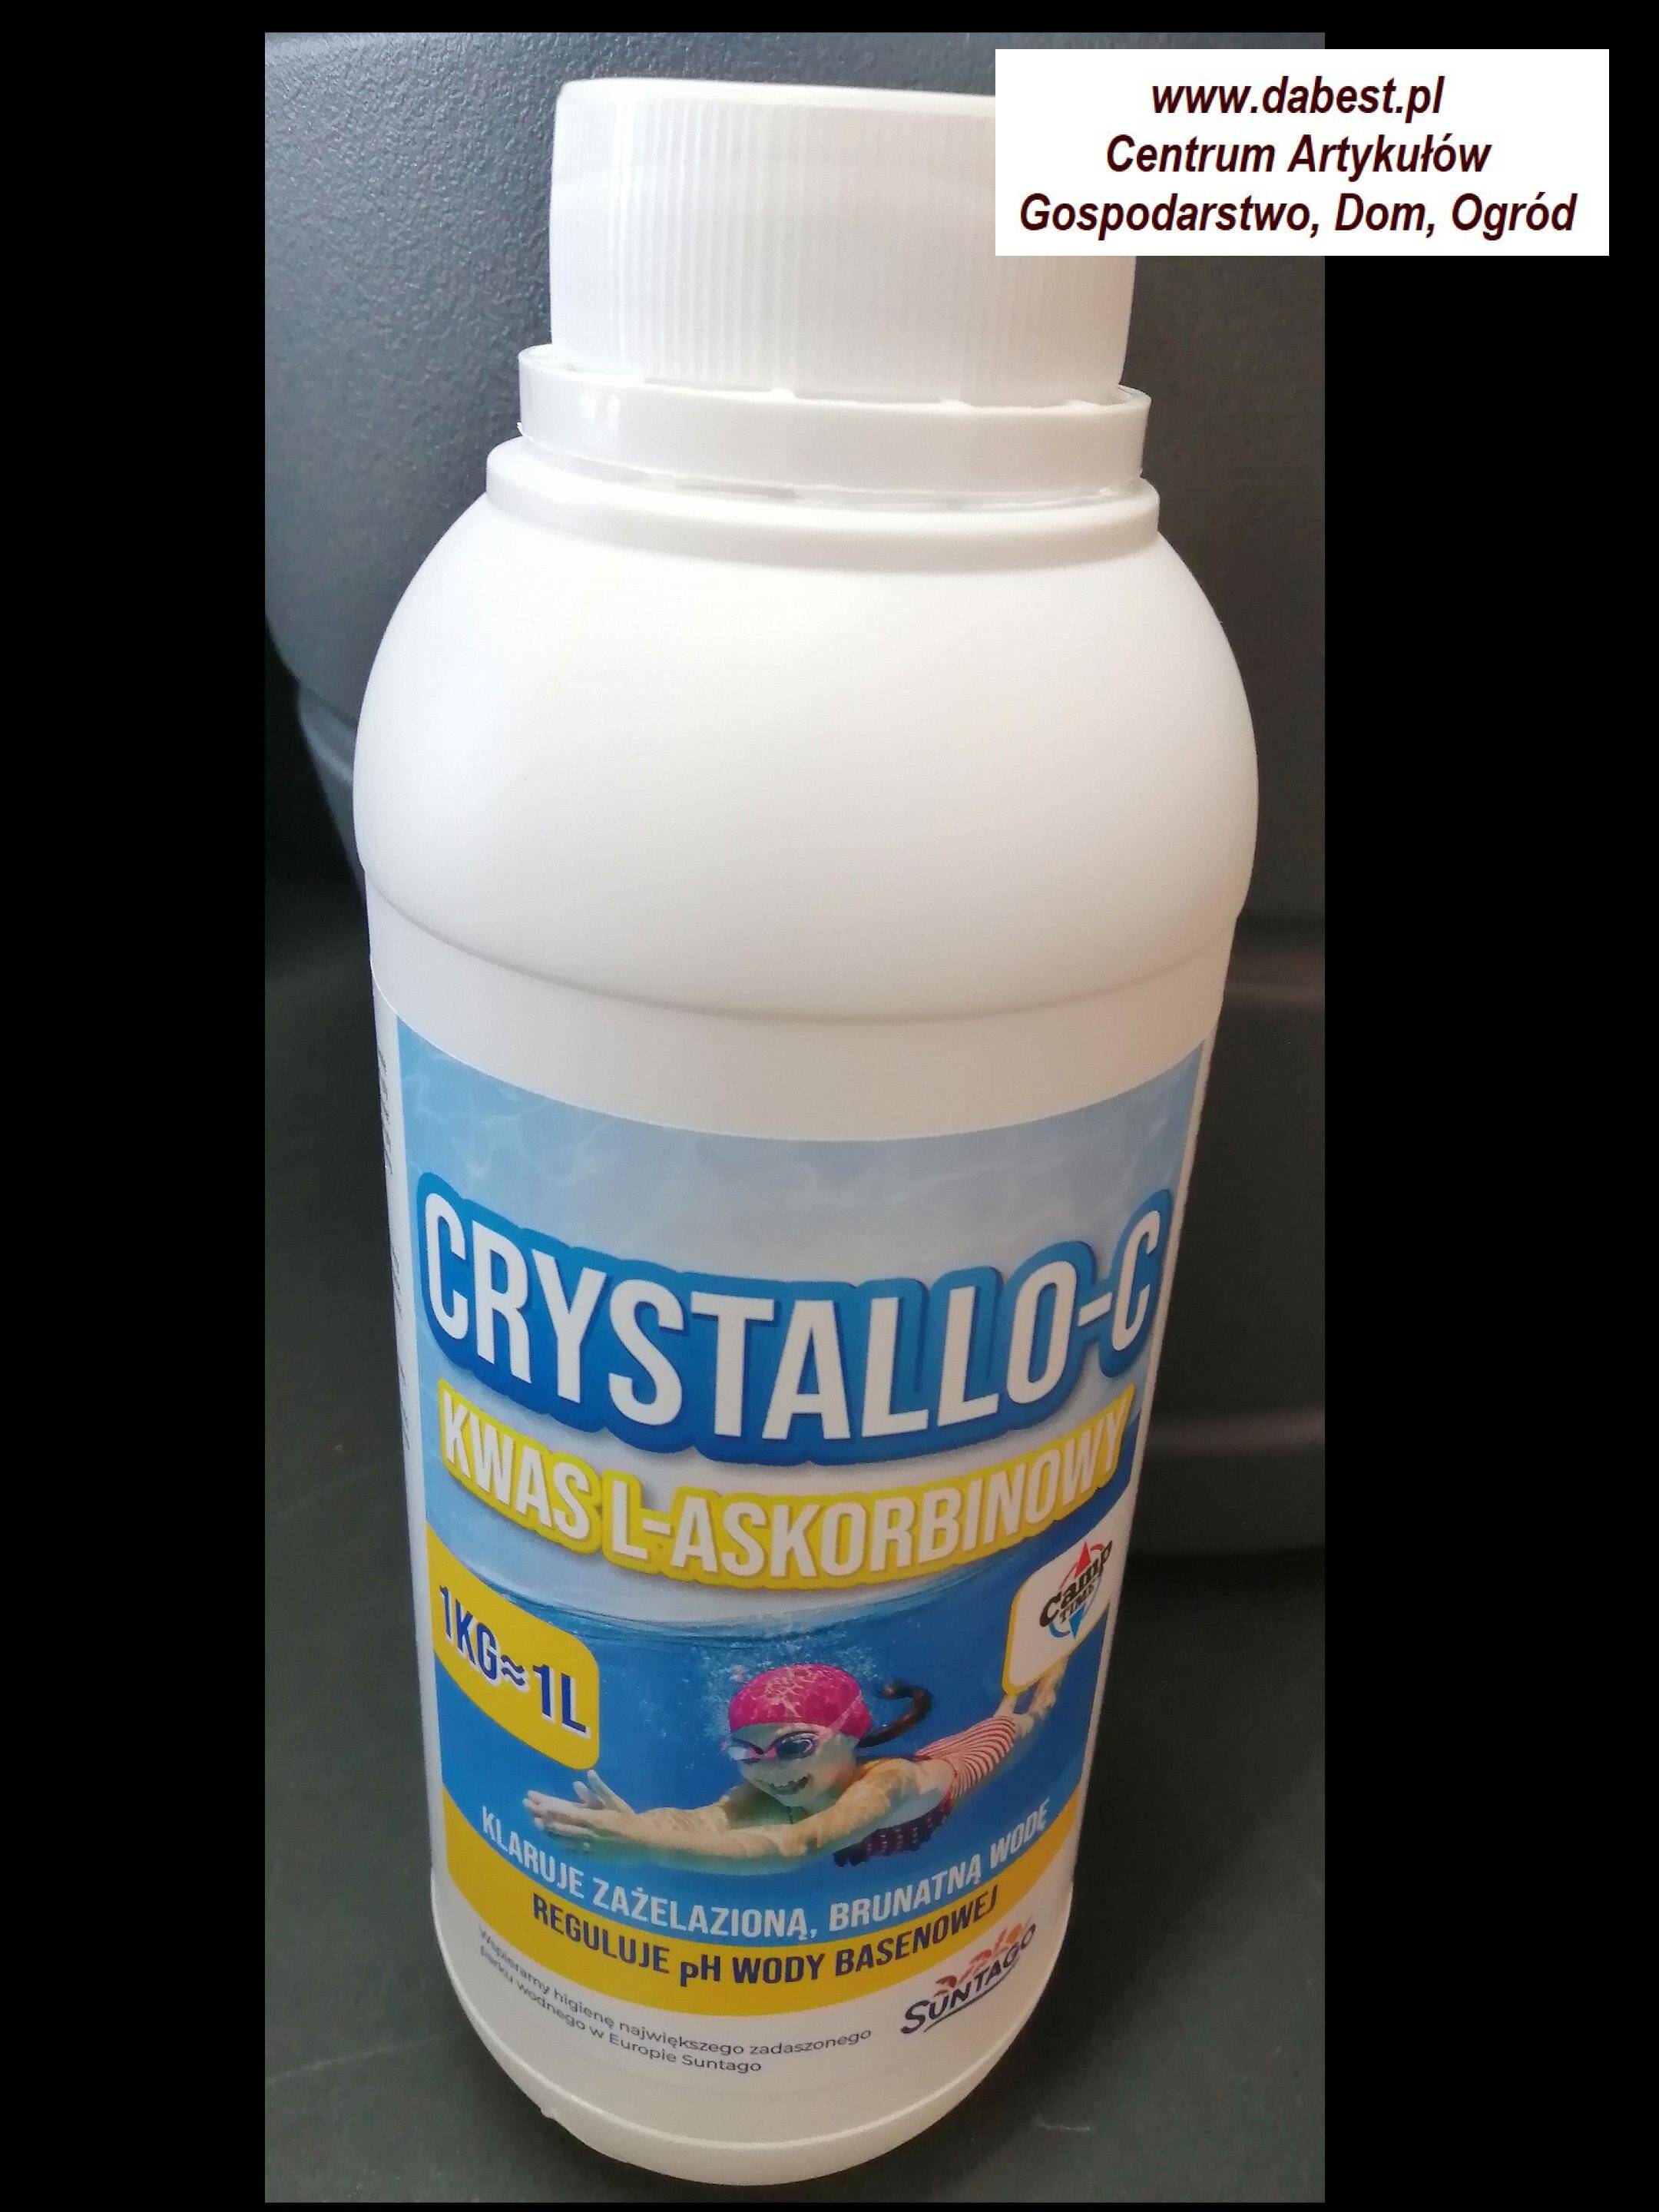 Crystallo-C 1kg- kwas L-askorbinowy do